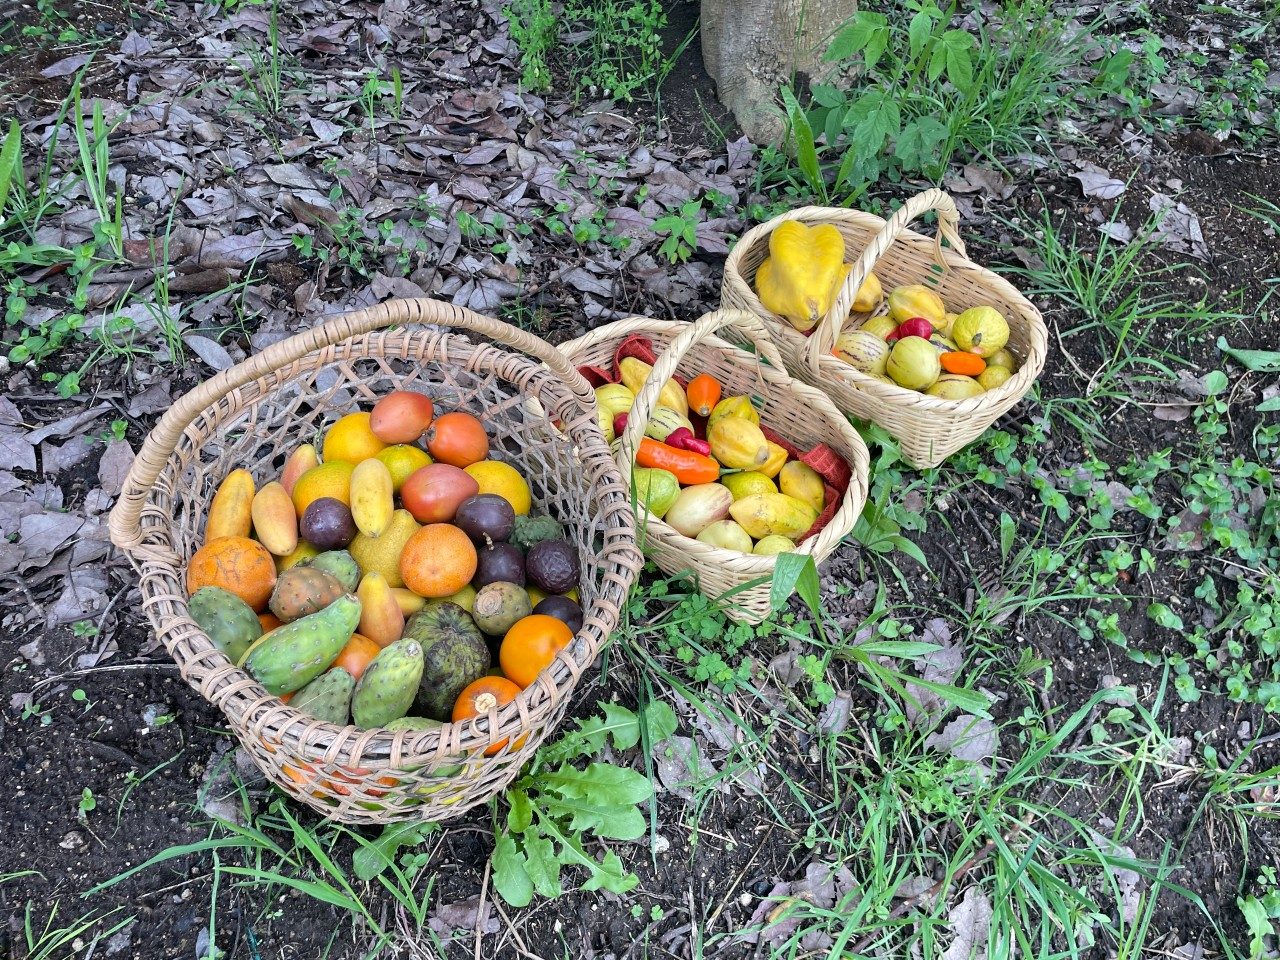 Produce harvested at Hacienda Verde. Photo by Morgan Harvey for Virginia Tech.